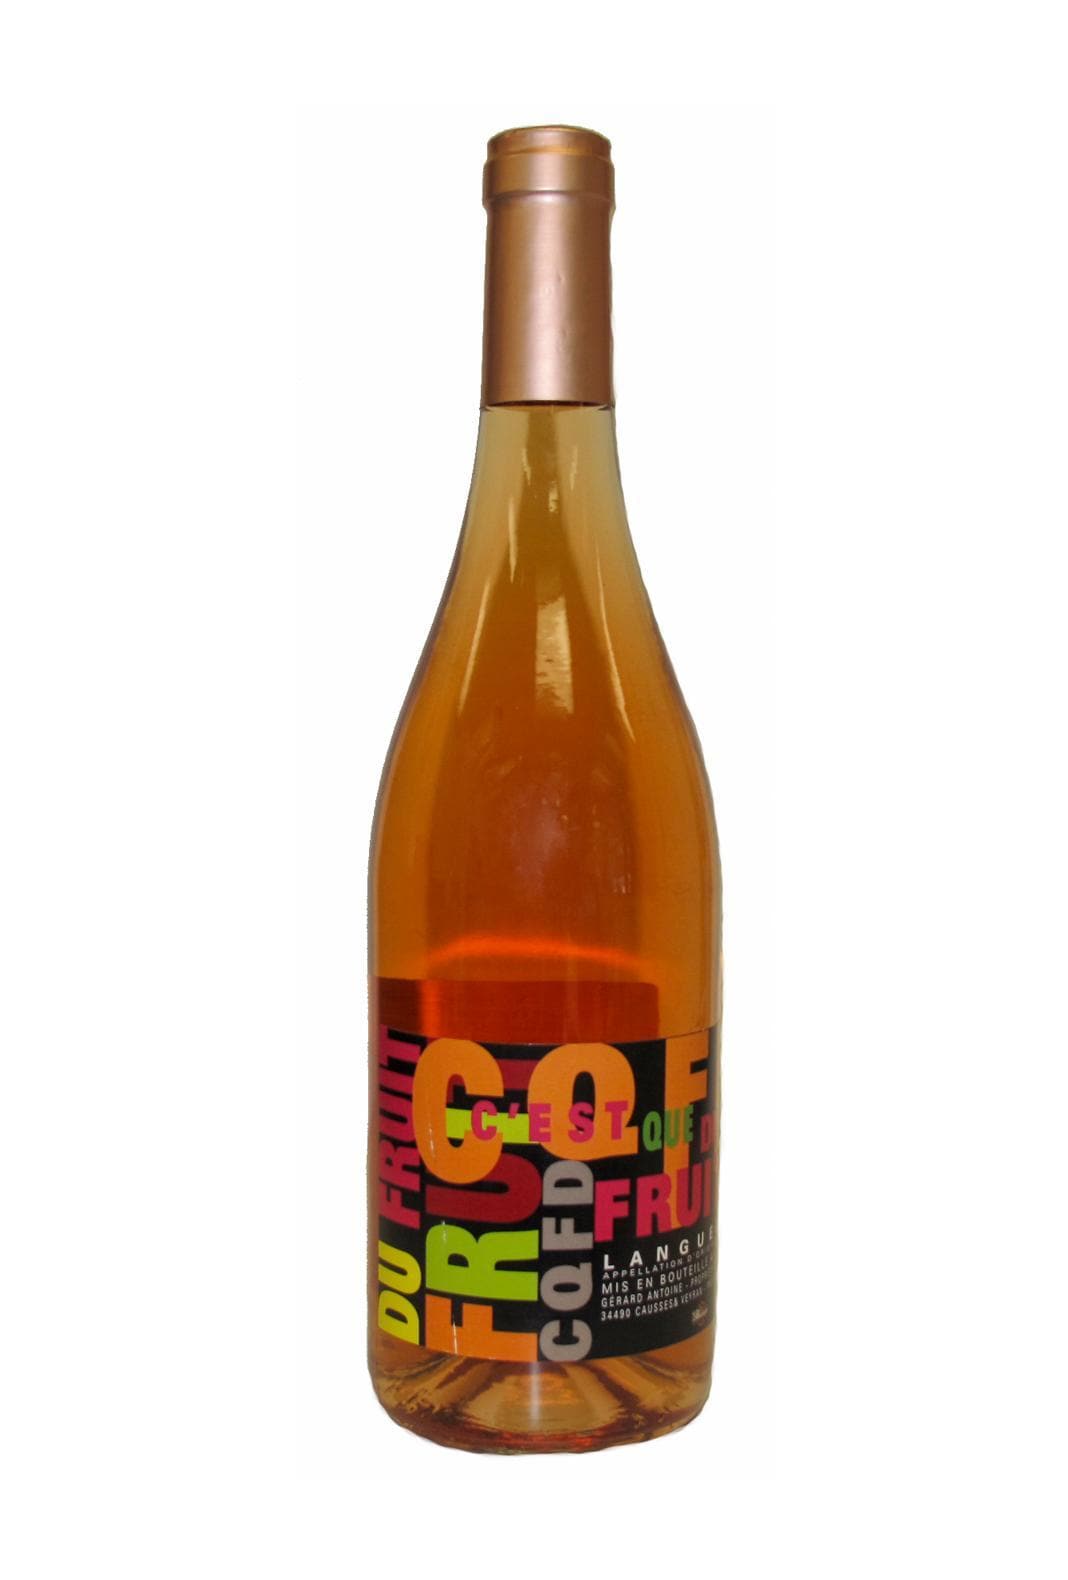 Veyran Rose Languedoc 2012 750ml | Liqueurs | Shop online at Spirits of France